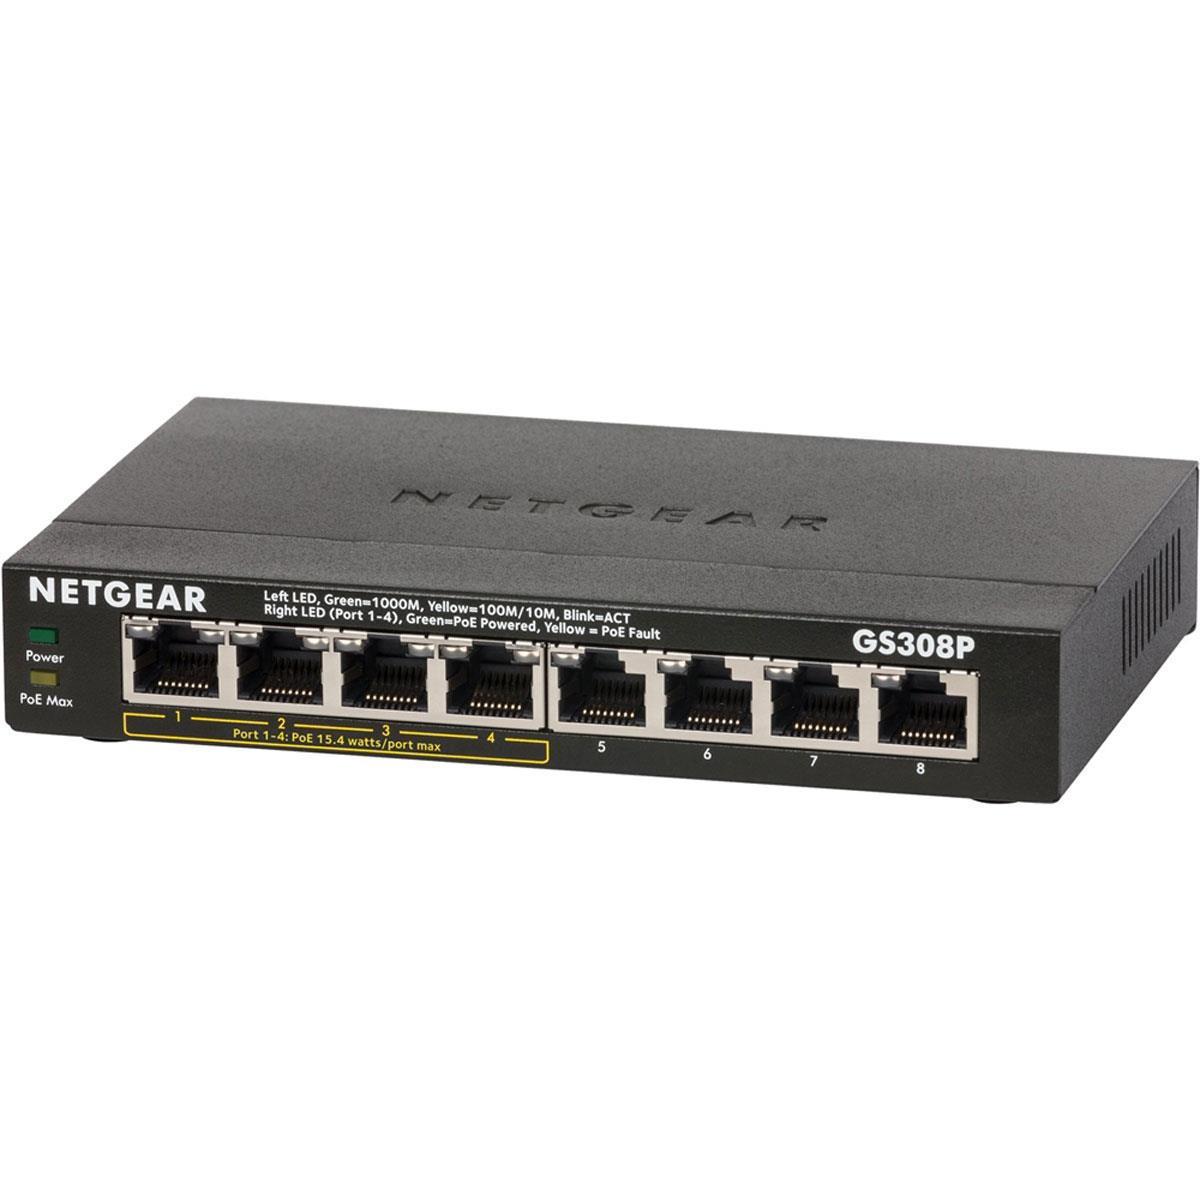 

Netgear GS308P 8-Port Gigabit Ethernet Unmanaged Switch with 4-Port PoE, Black